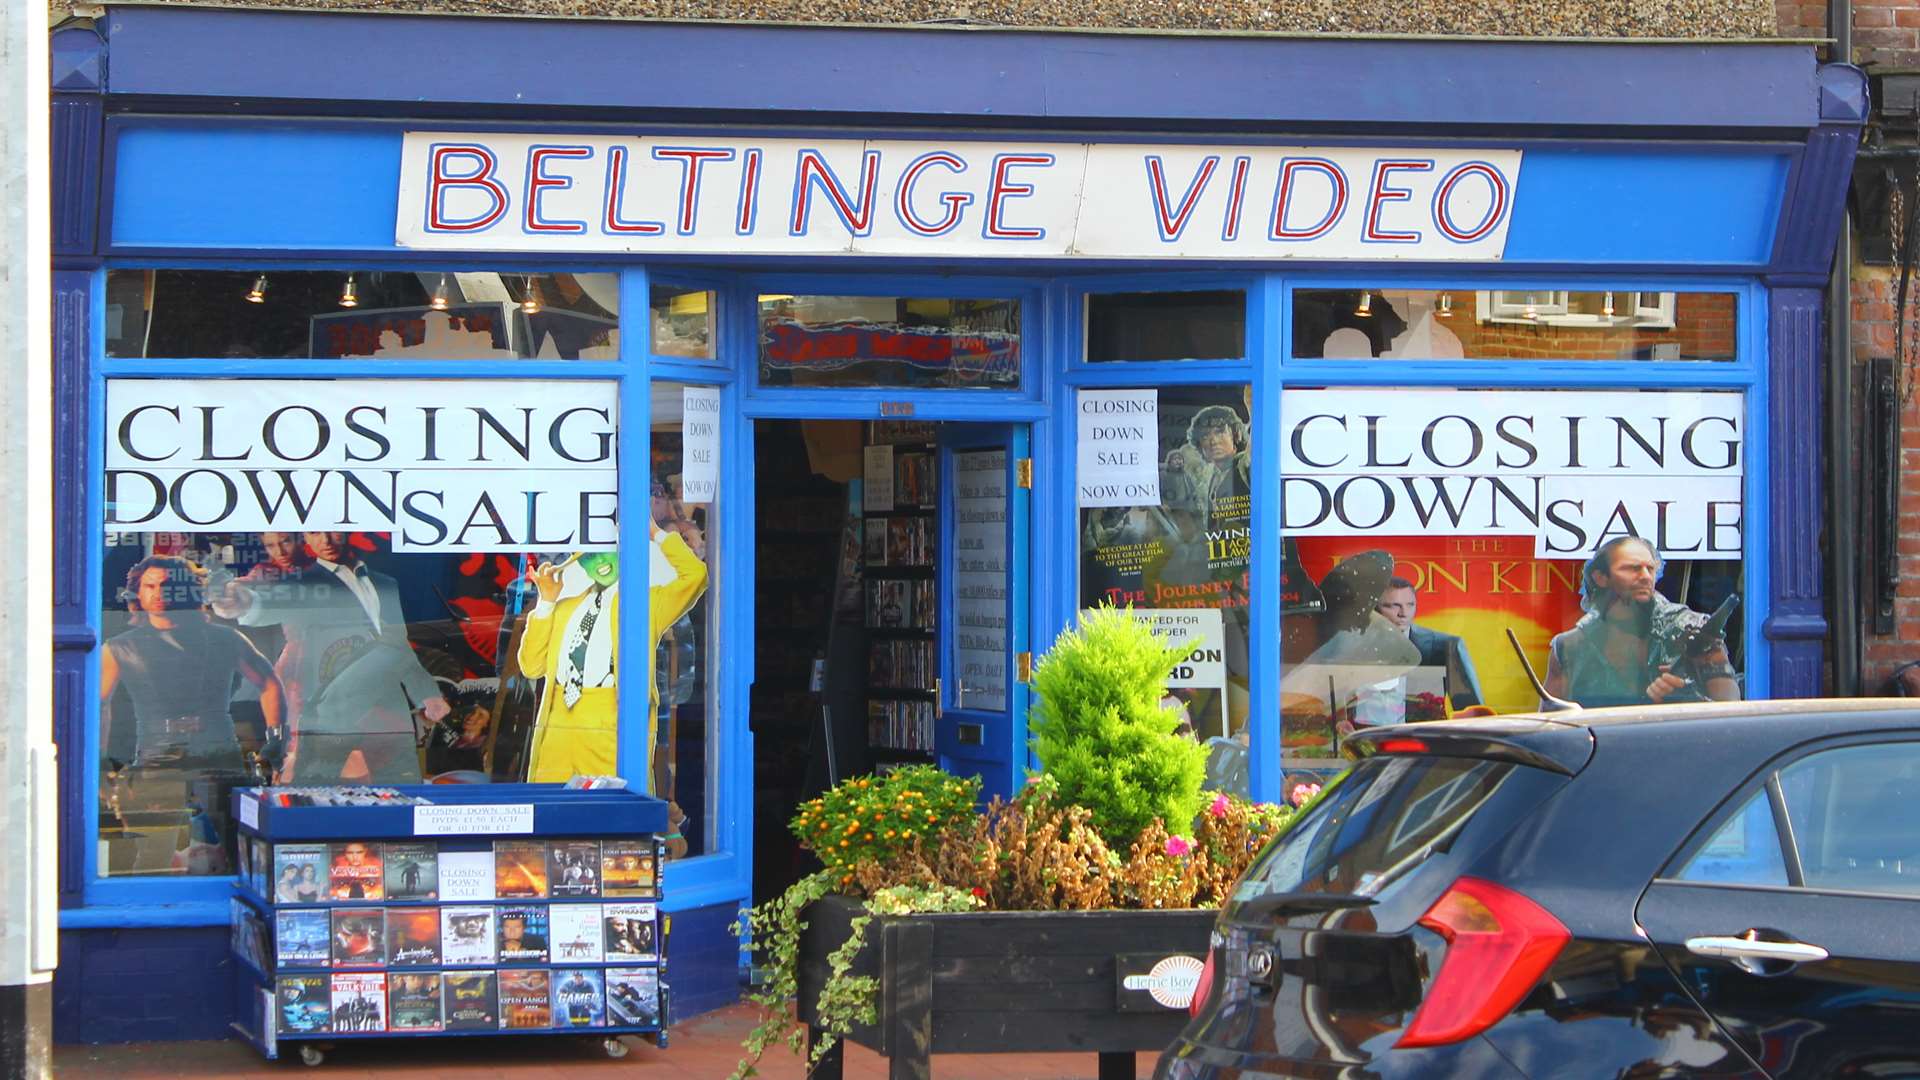 Beltinge Video has now closed